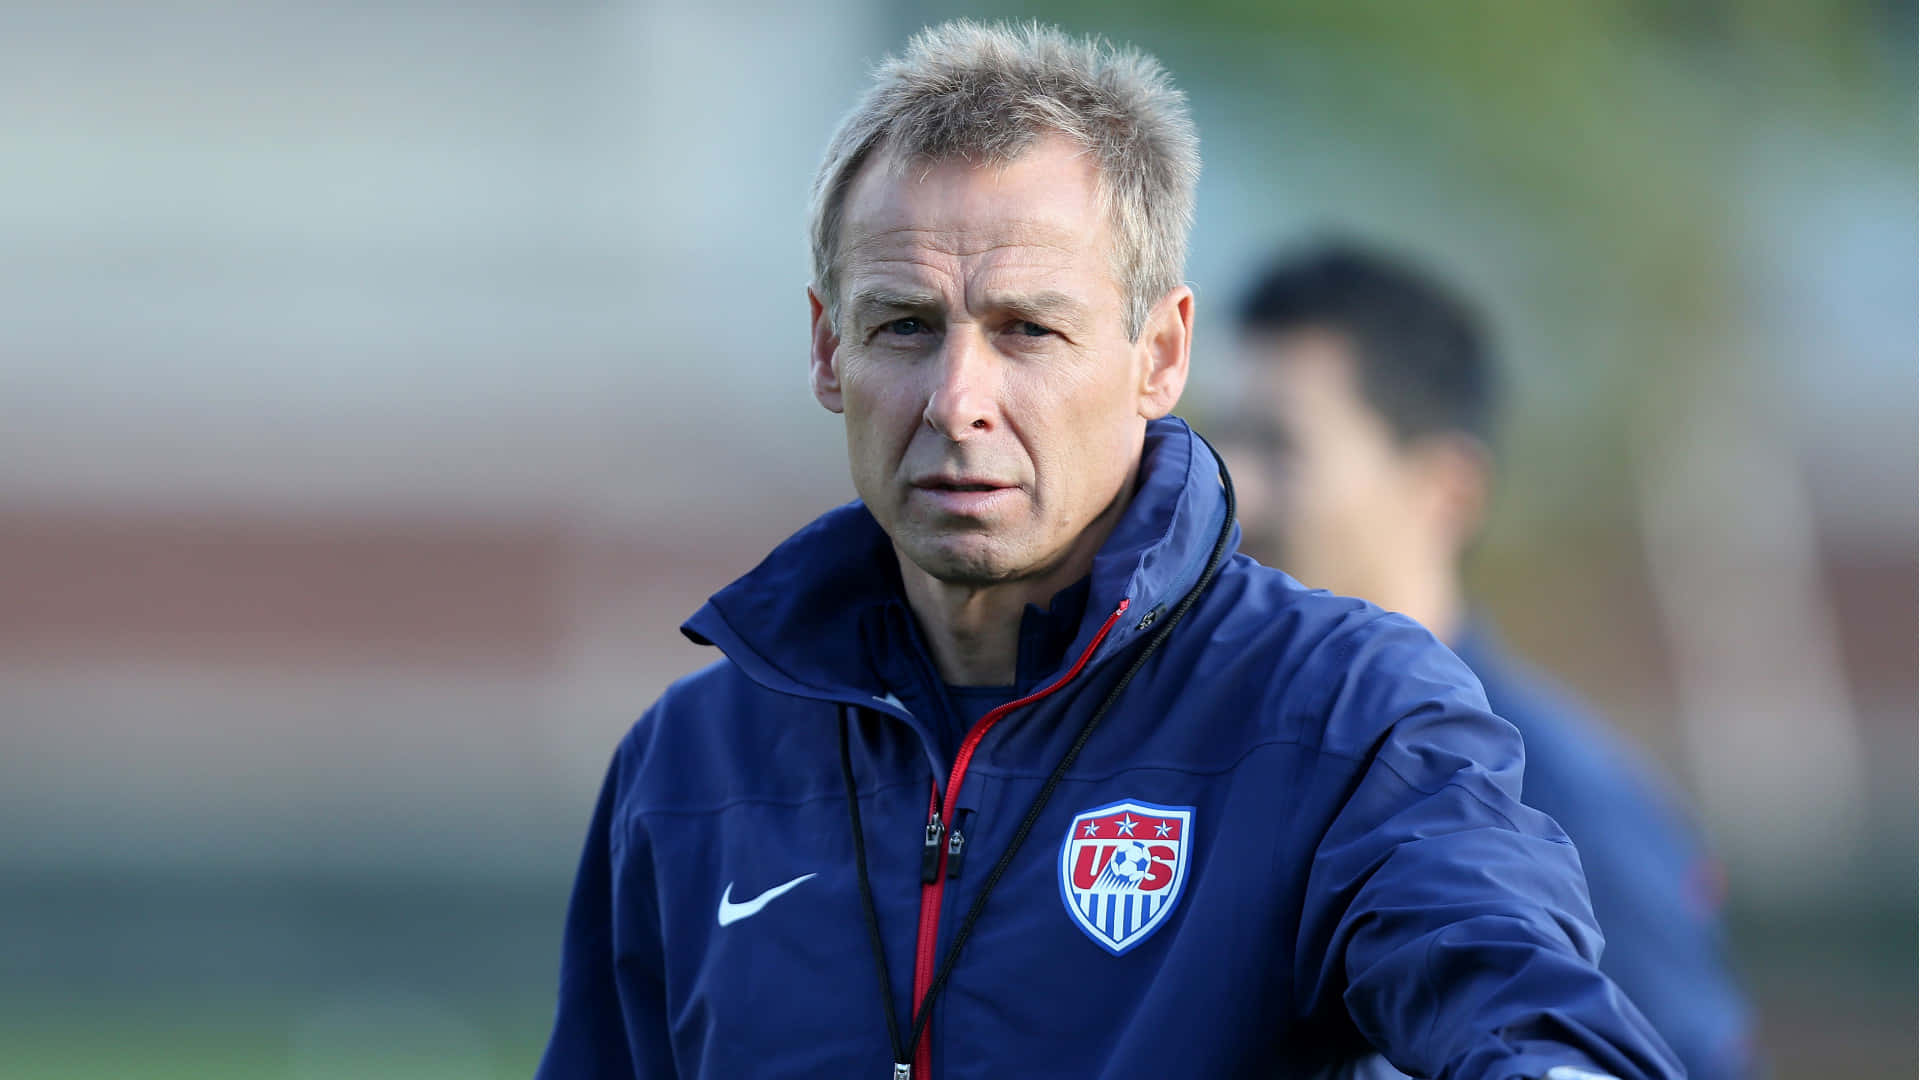 Professionellerfußballtrainer Jurgen Klinsmann Wallpaper